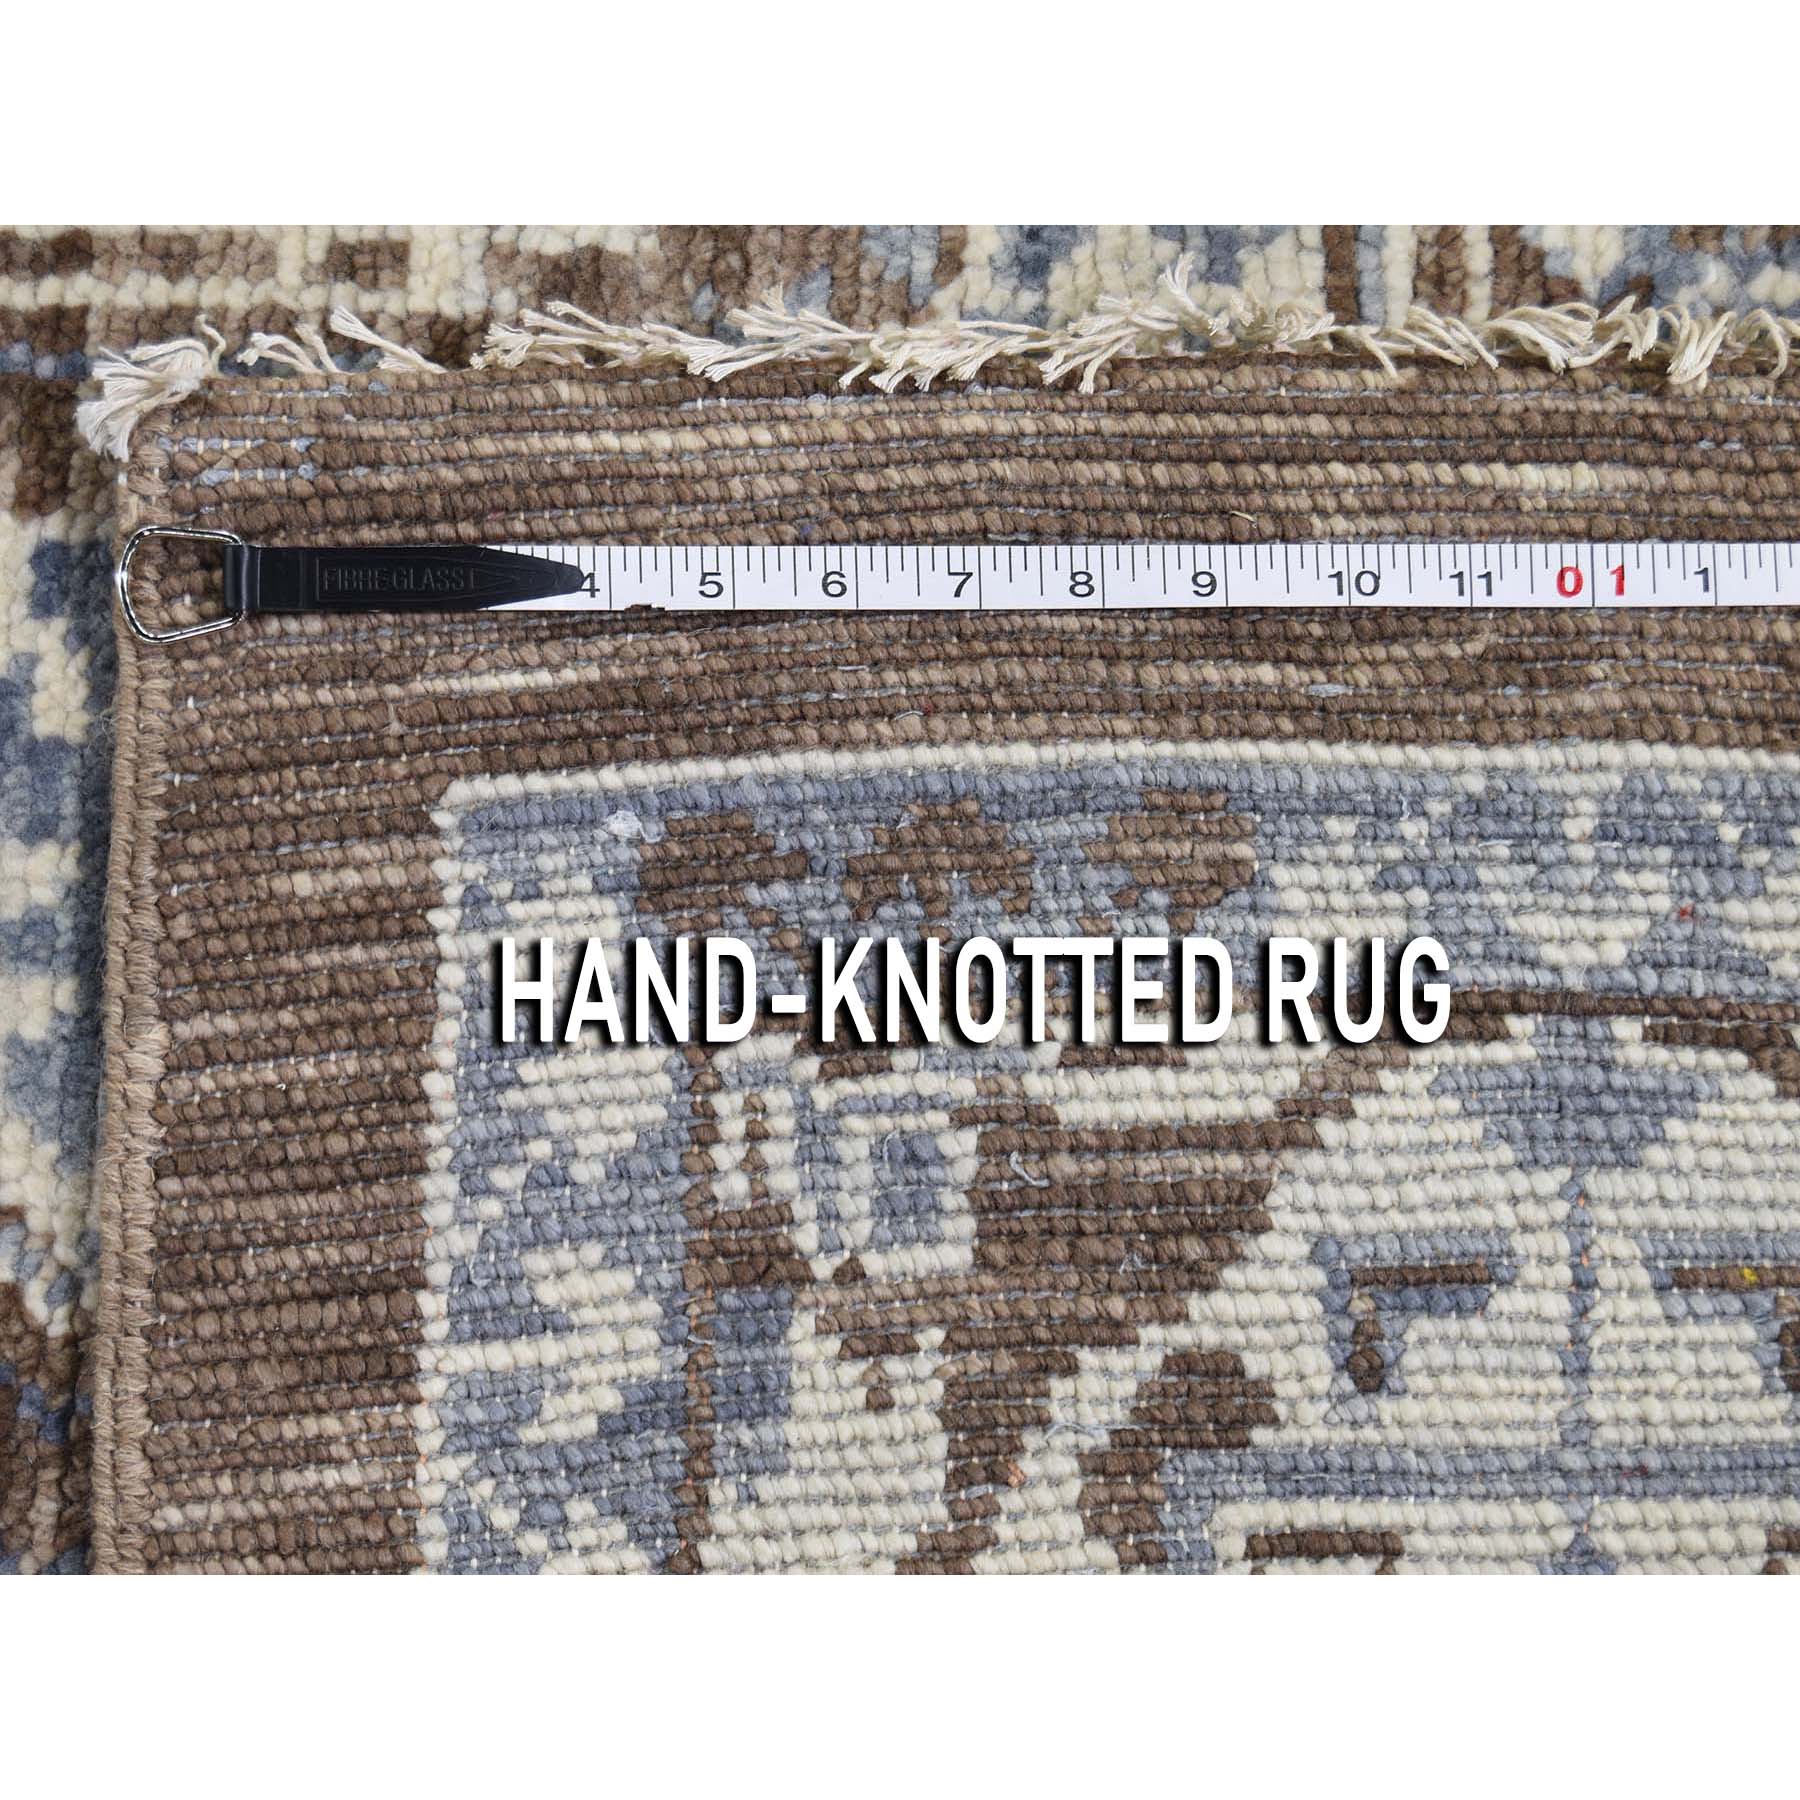 10-2 x14-5  Brown Mamluk Design Veg Dyes Hand Spun New Zealand Wool Oriental Rug 